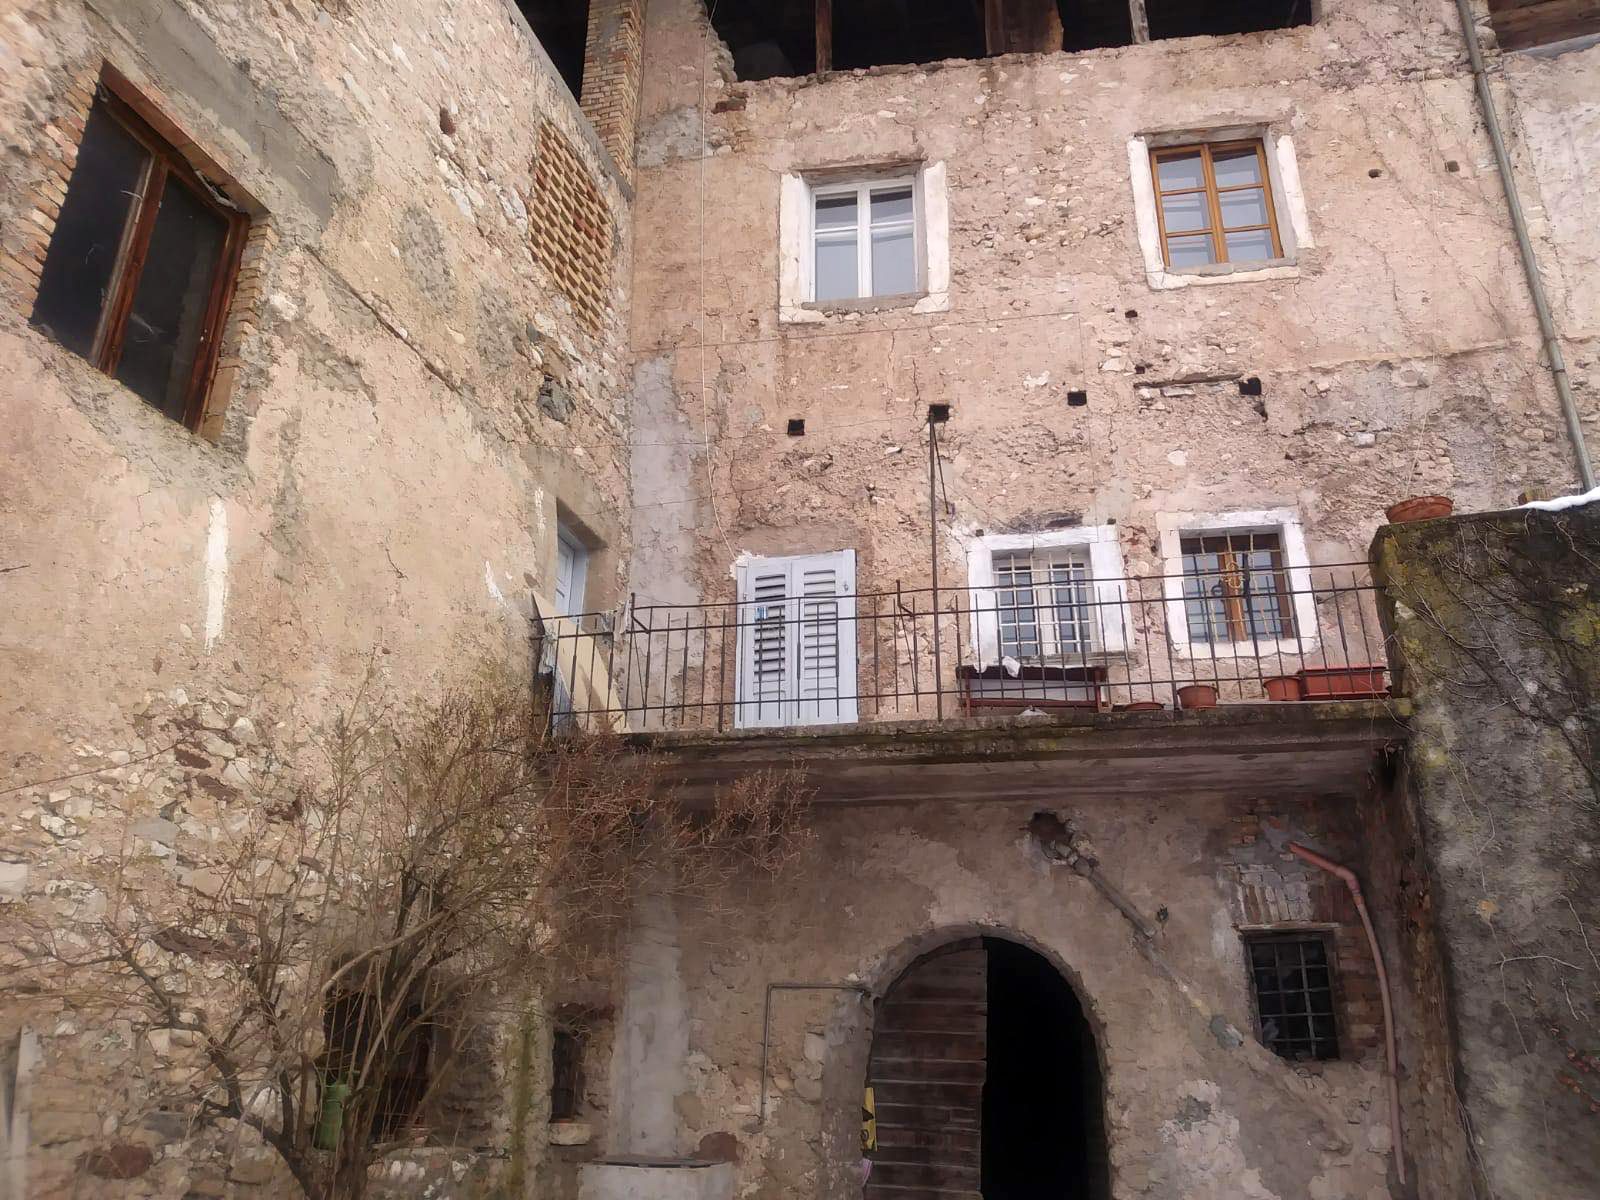 Exterior of Casa Ziller (now Casa Giuliani) in Sanzeno, Trentino. Photo courtesy of Elisa Giuliani Pancheri.